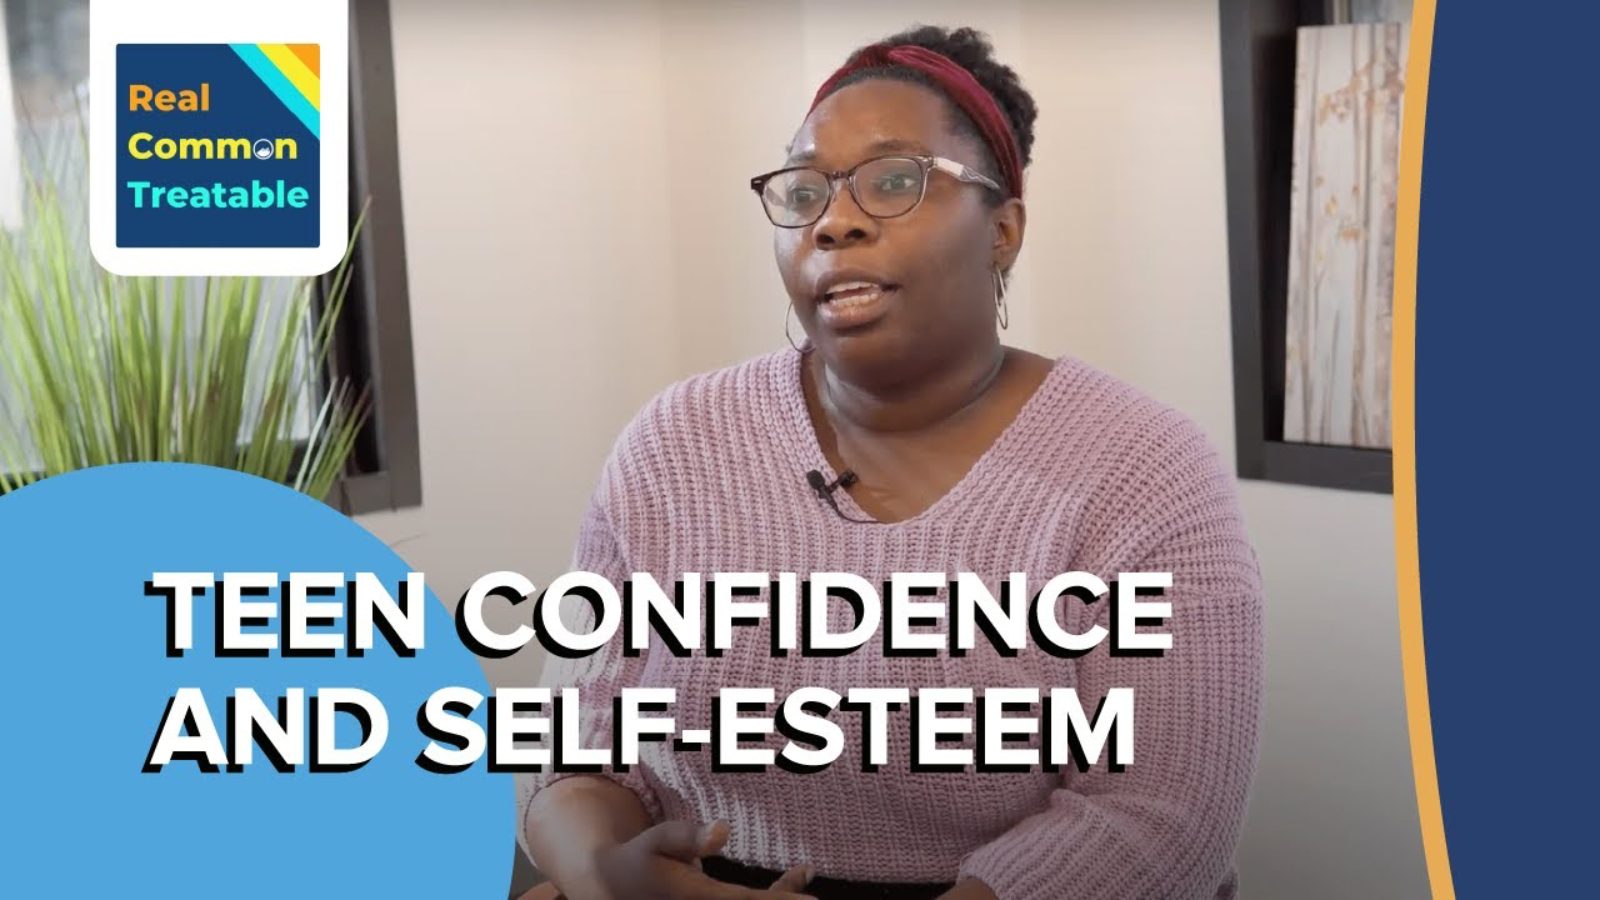 A therapist explaining teen confidence and self-esteem